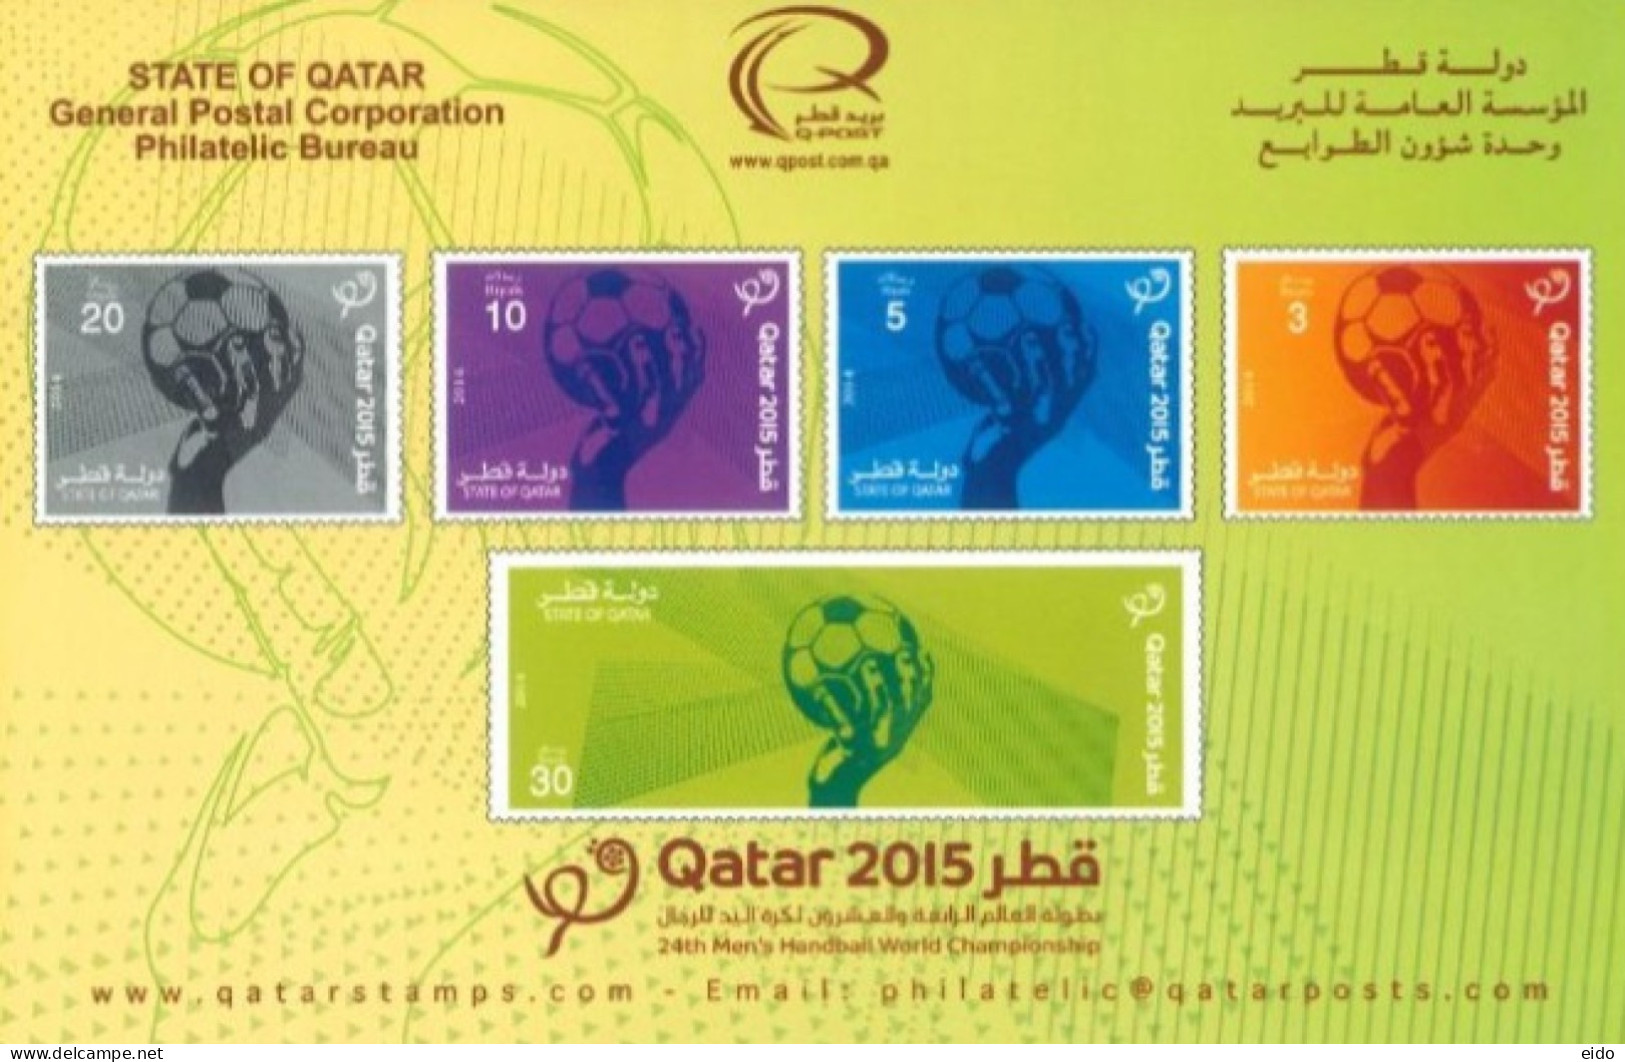 QATAR  - 2014, POSTAL STAMPS BULETIN OF 24th MEN'S HANDBALL WORLD CHAMPIONSHIP AND TECHNICAL DETAILS. - Qatar